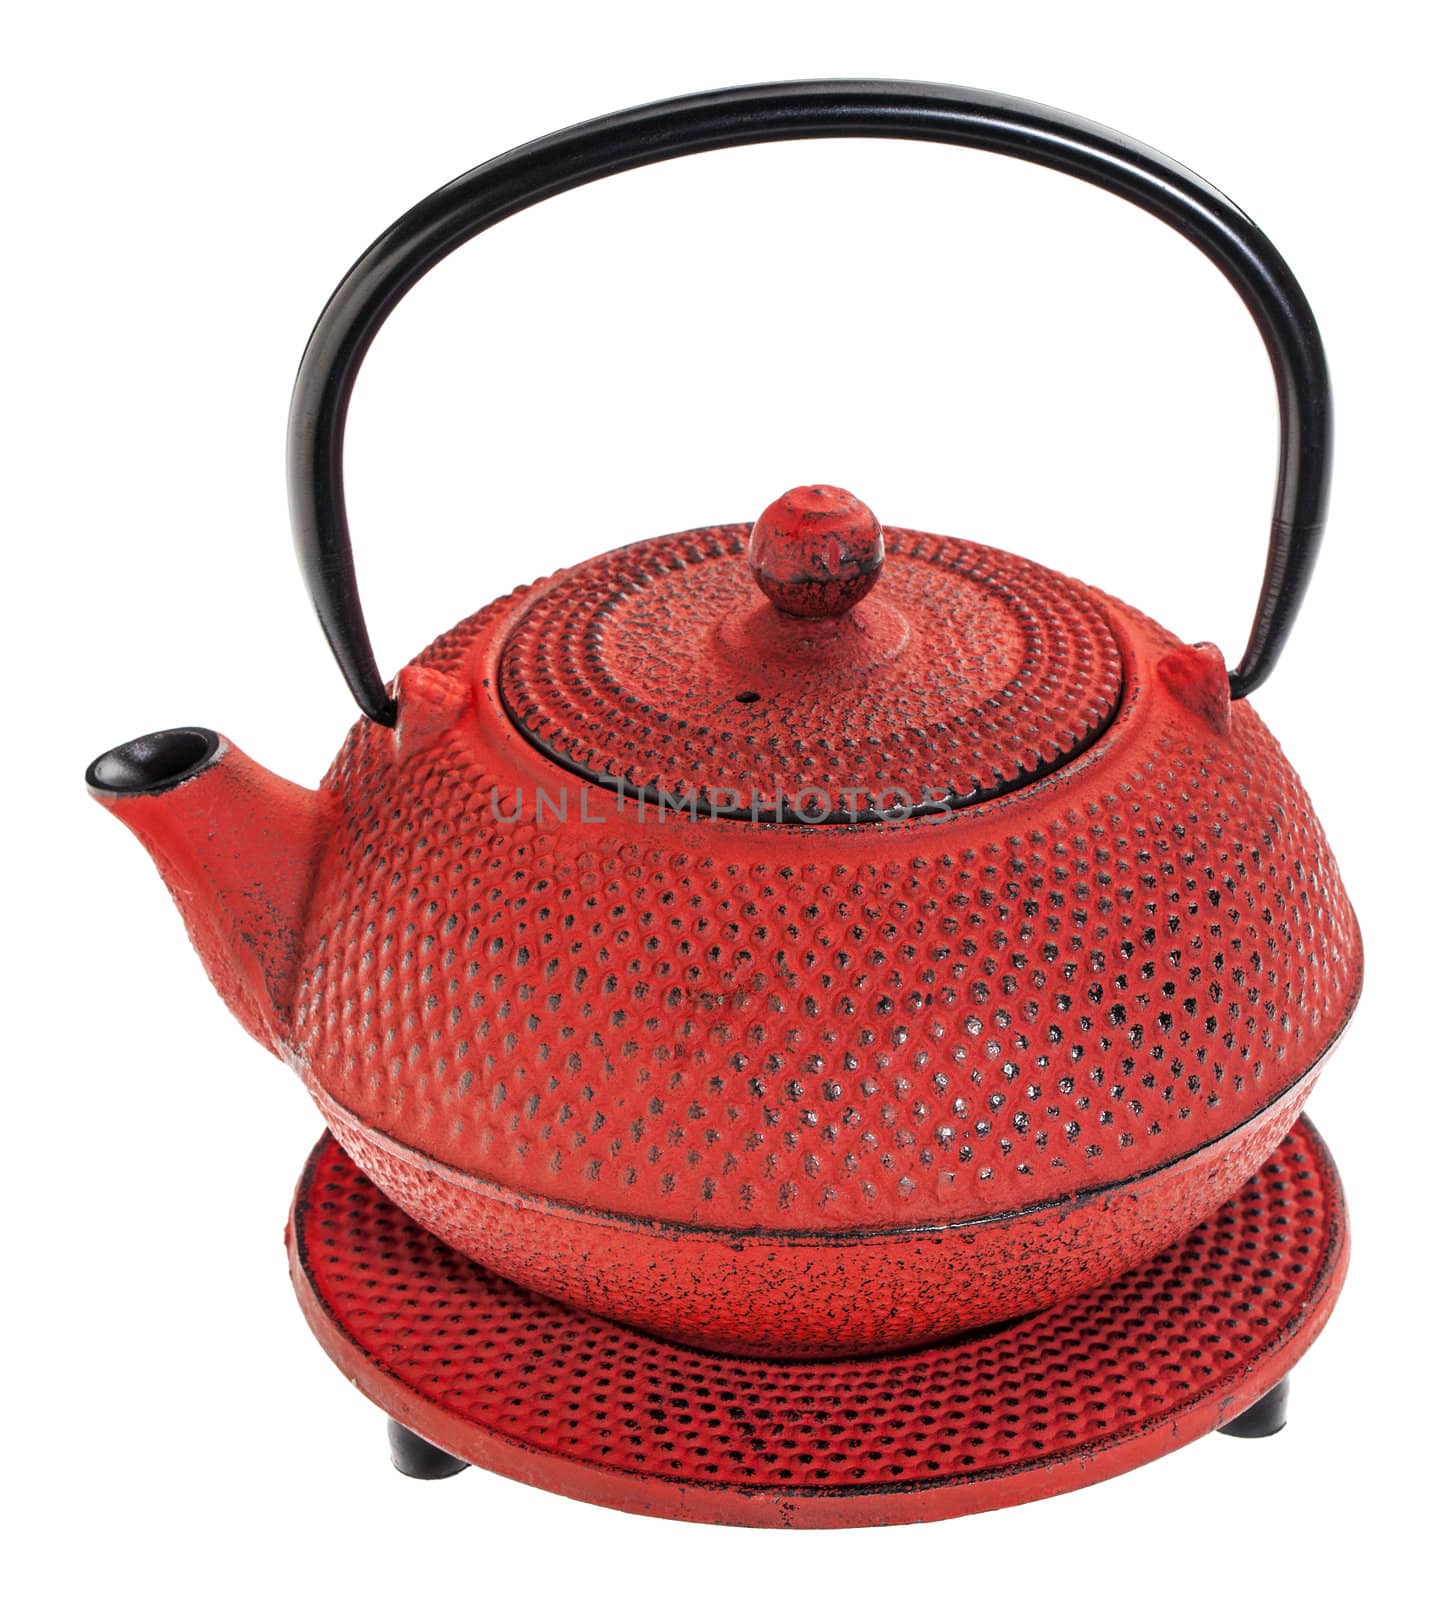 red tetsubin teapot by PixelsAway